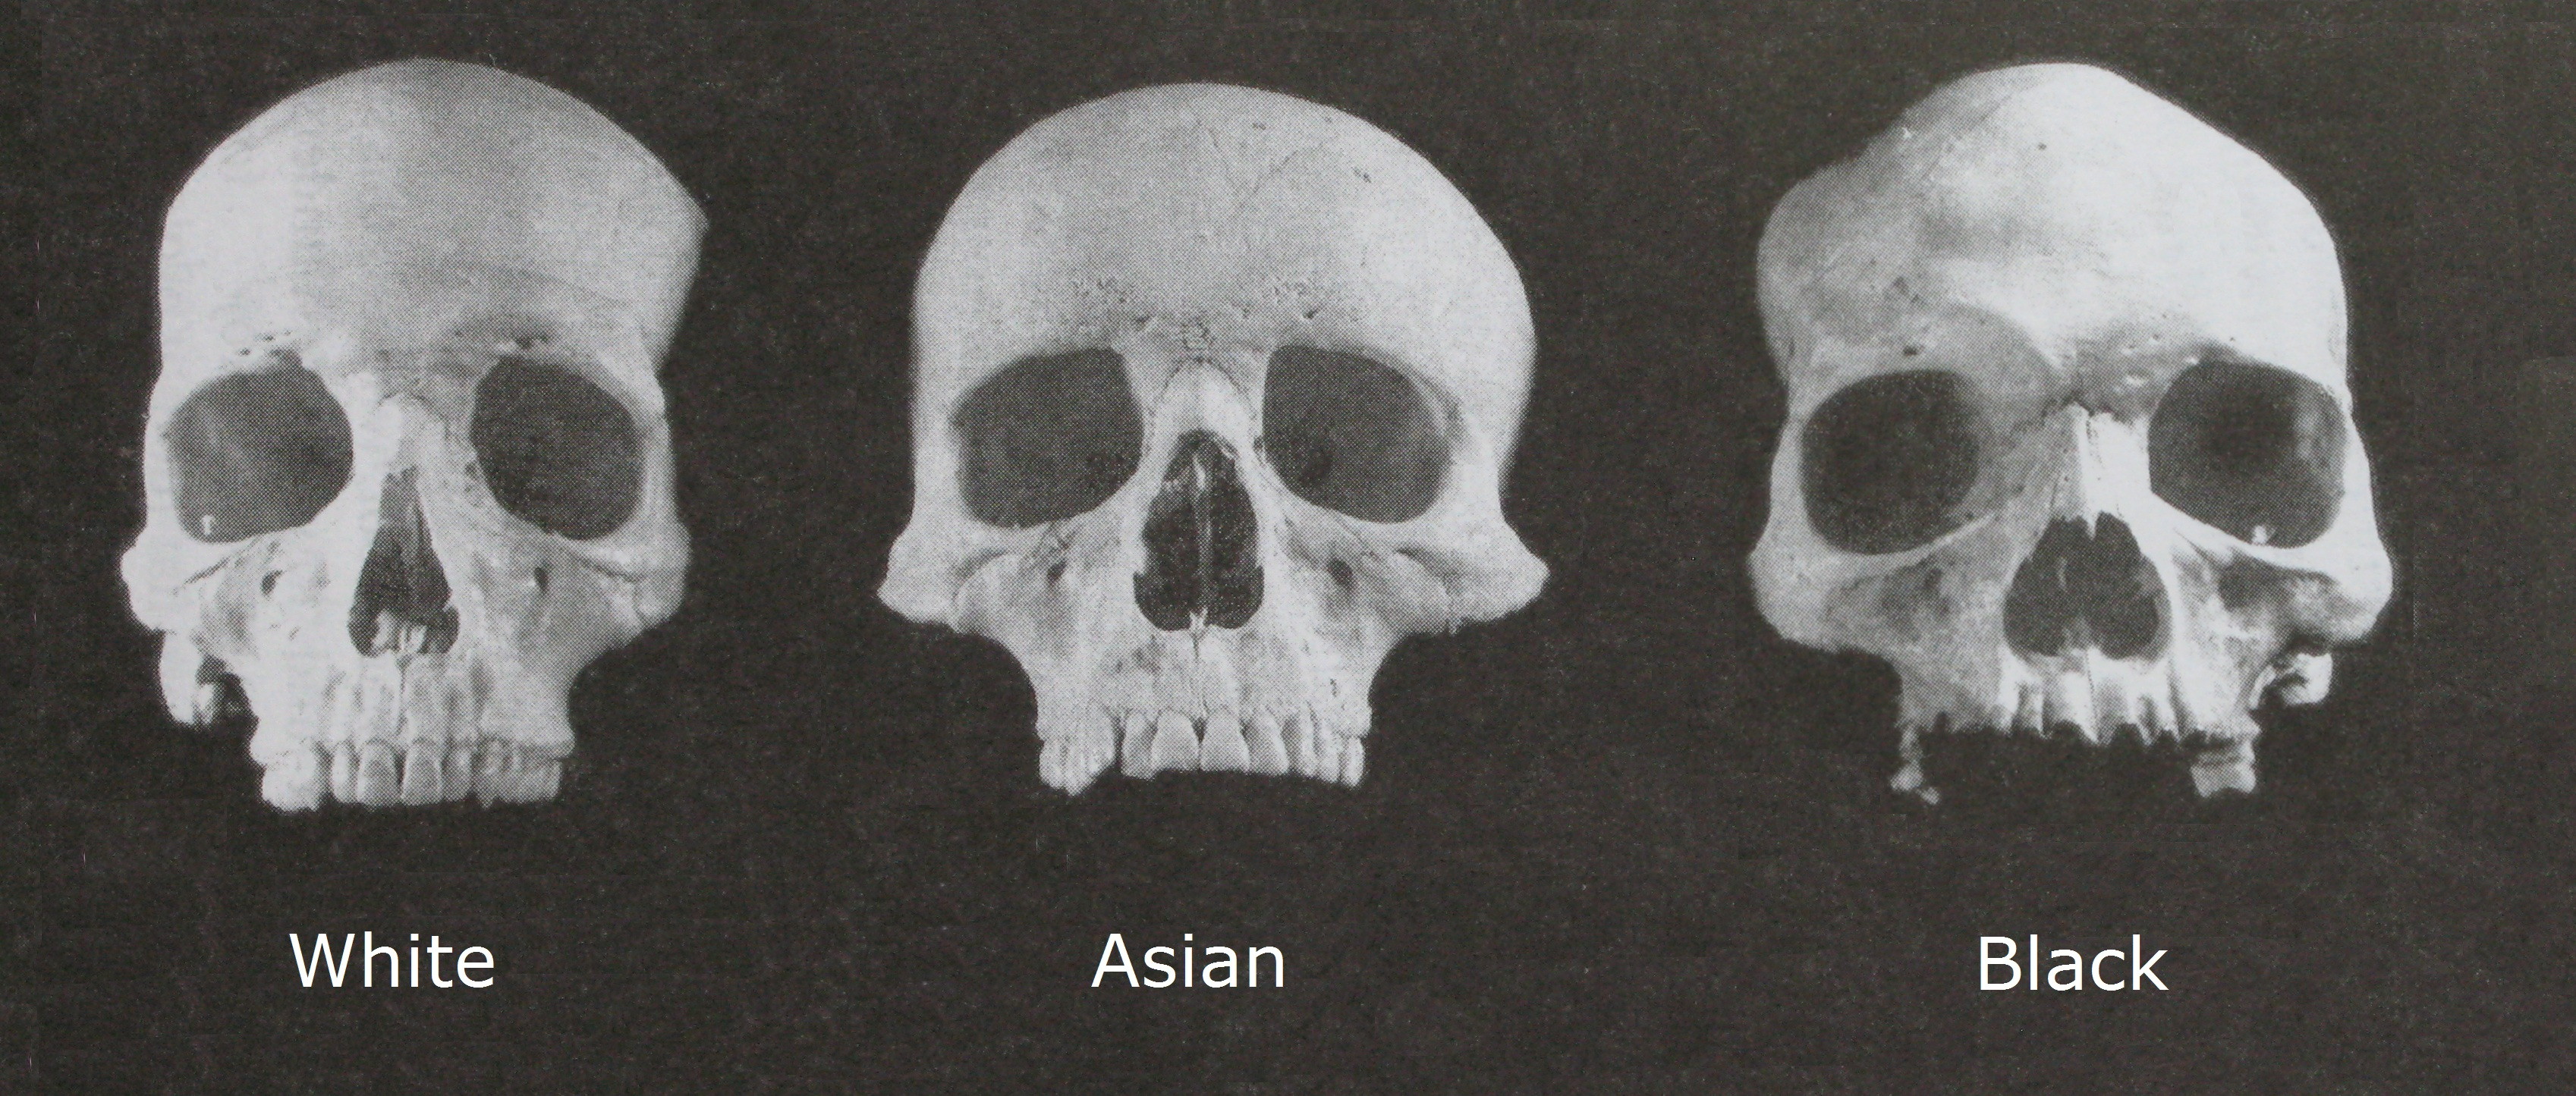 Human Differentiation: Evolution of Racial Characteristics